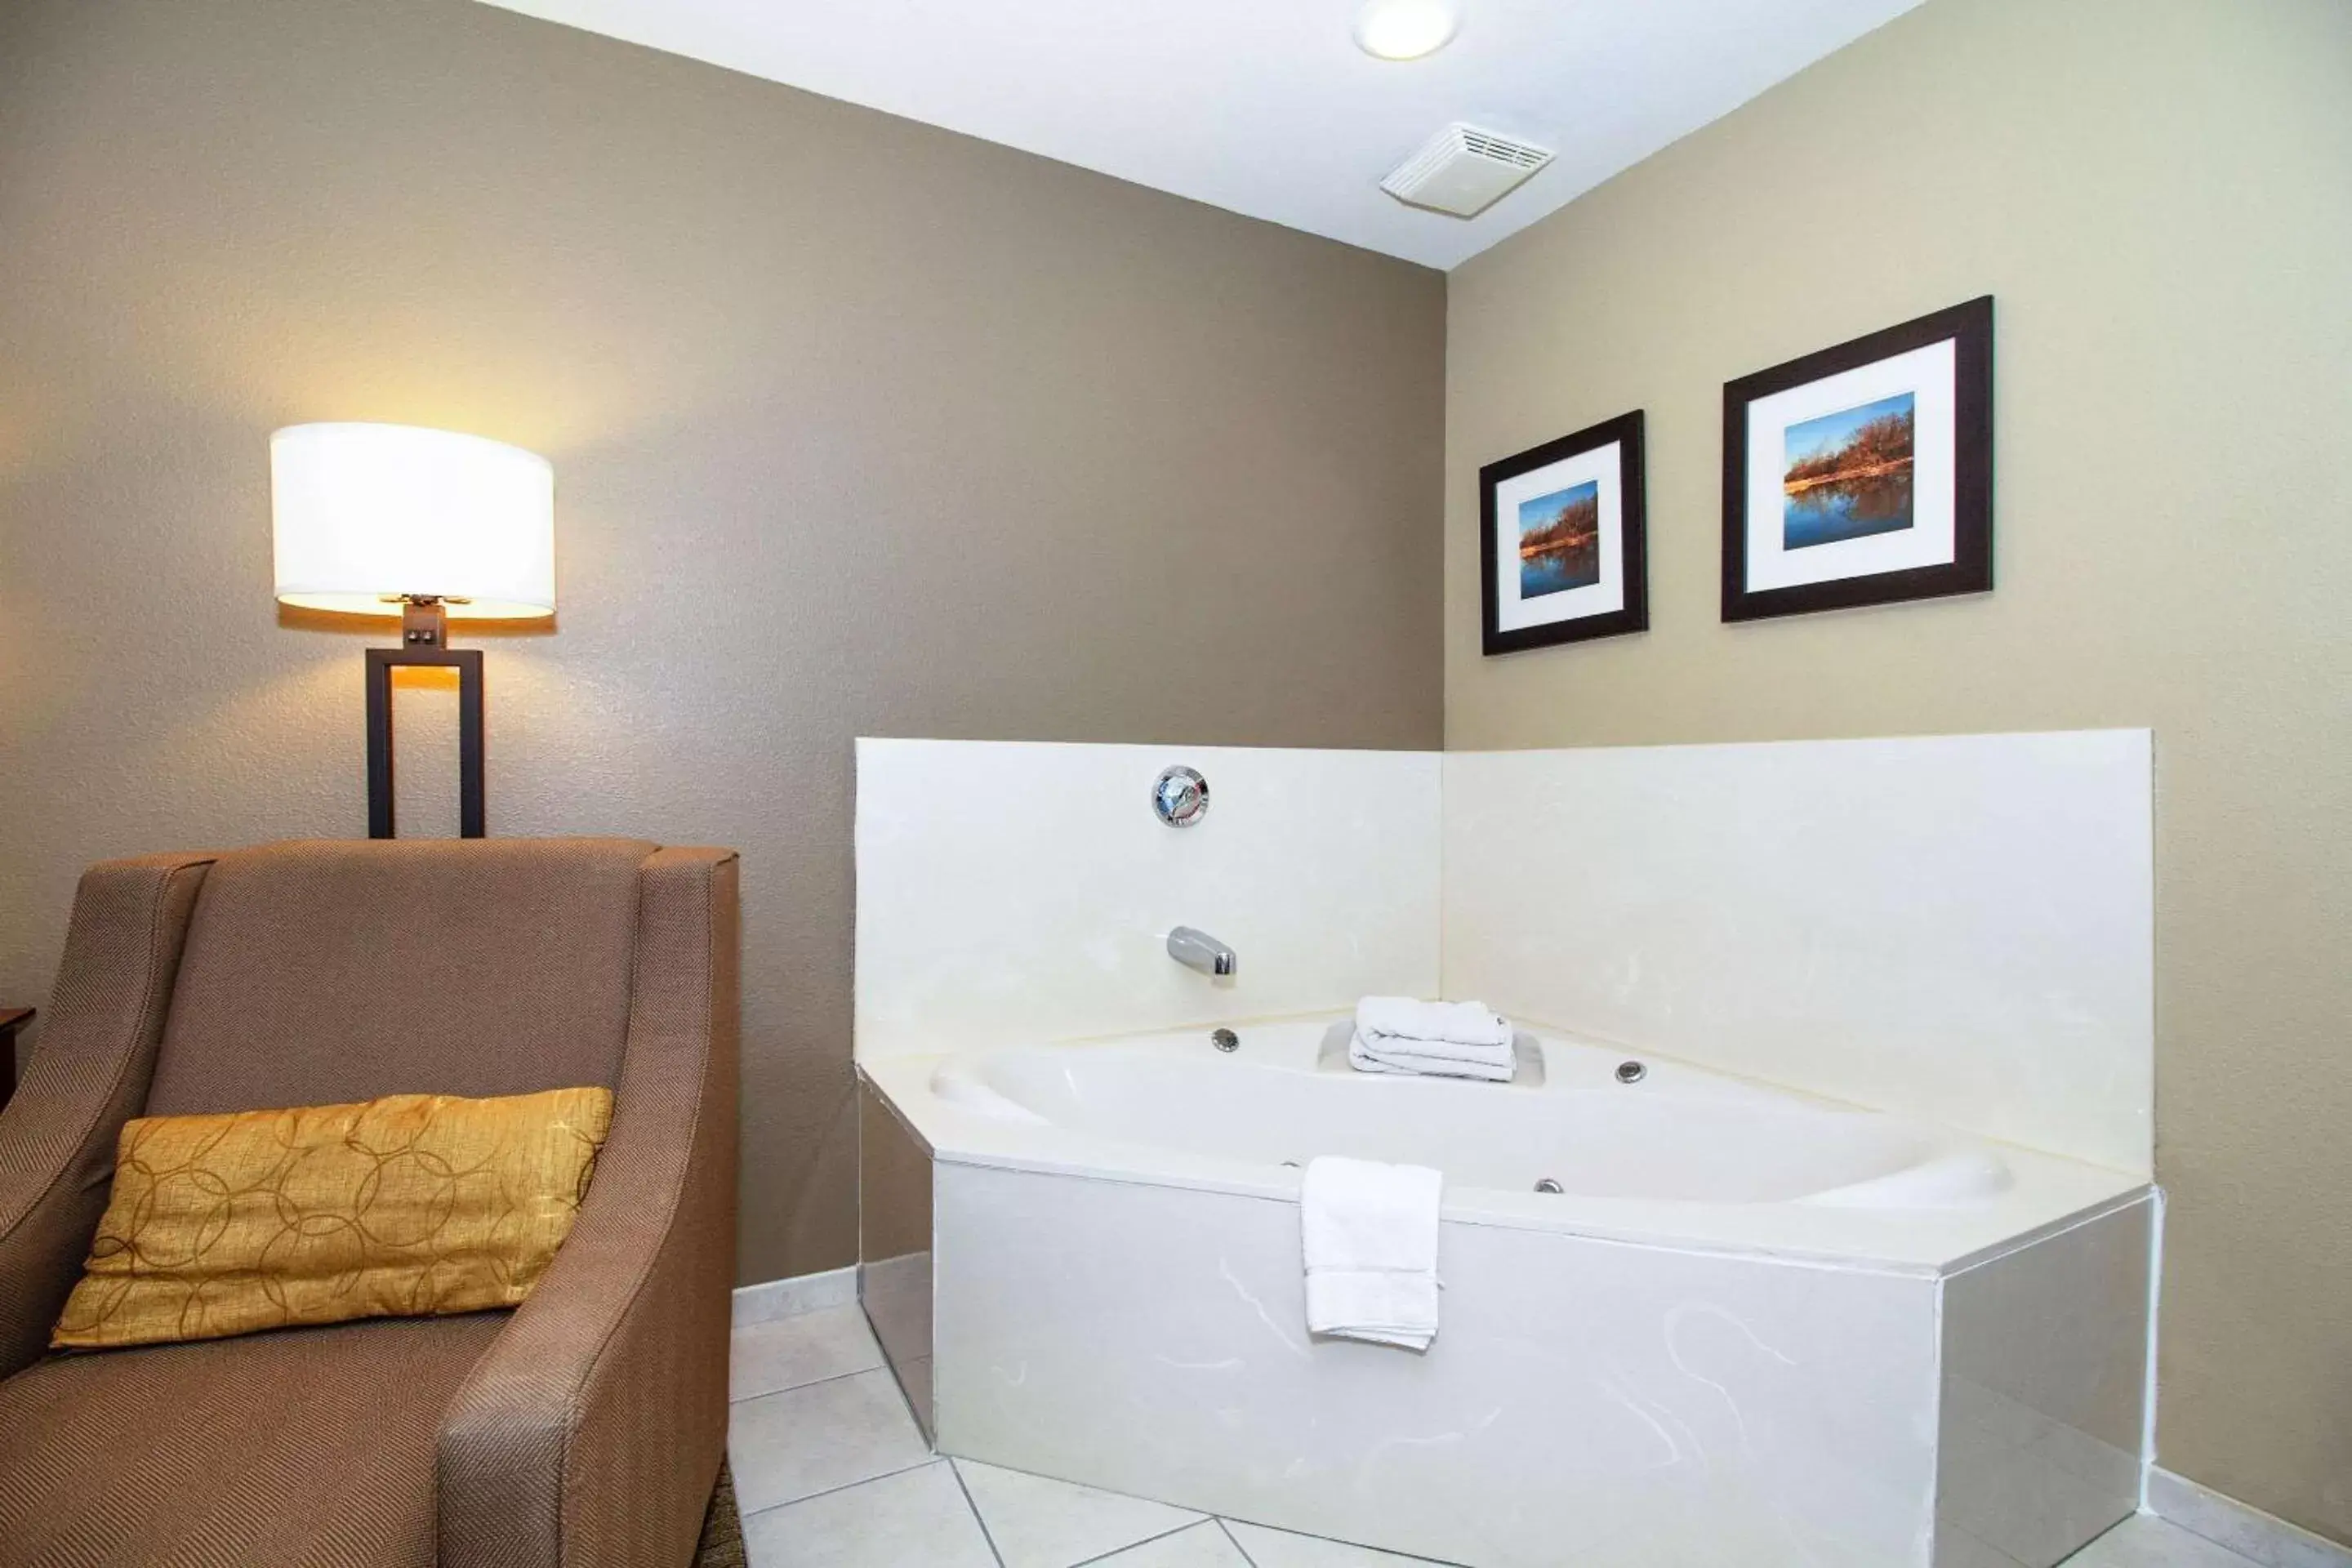 Bedroom, Bathroom in Comfort Inn & Suites East Moline near I-80